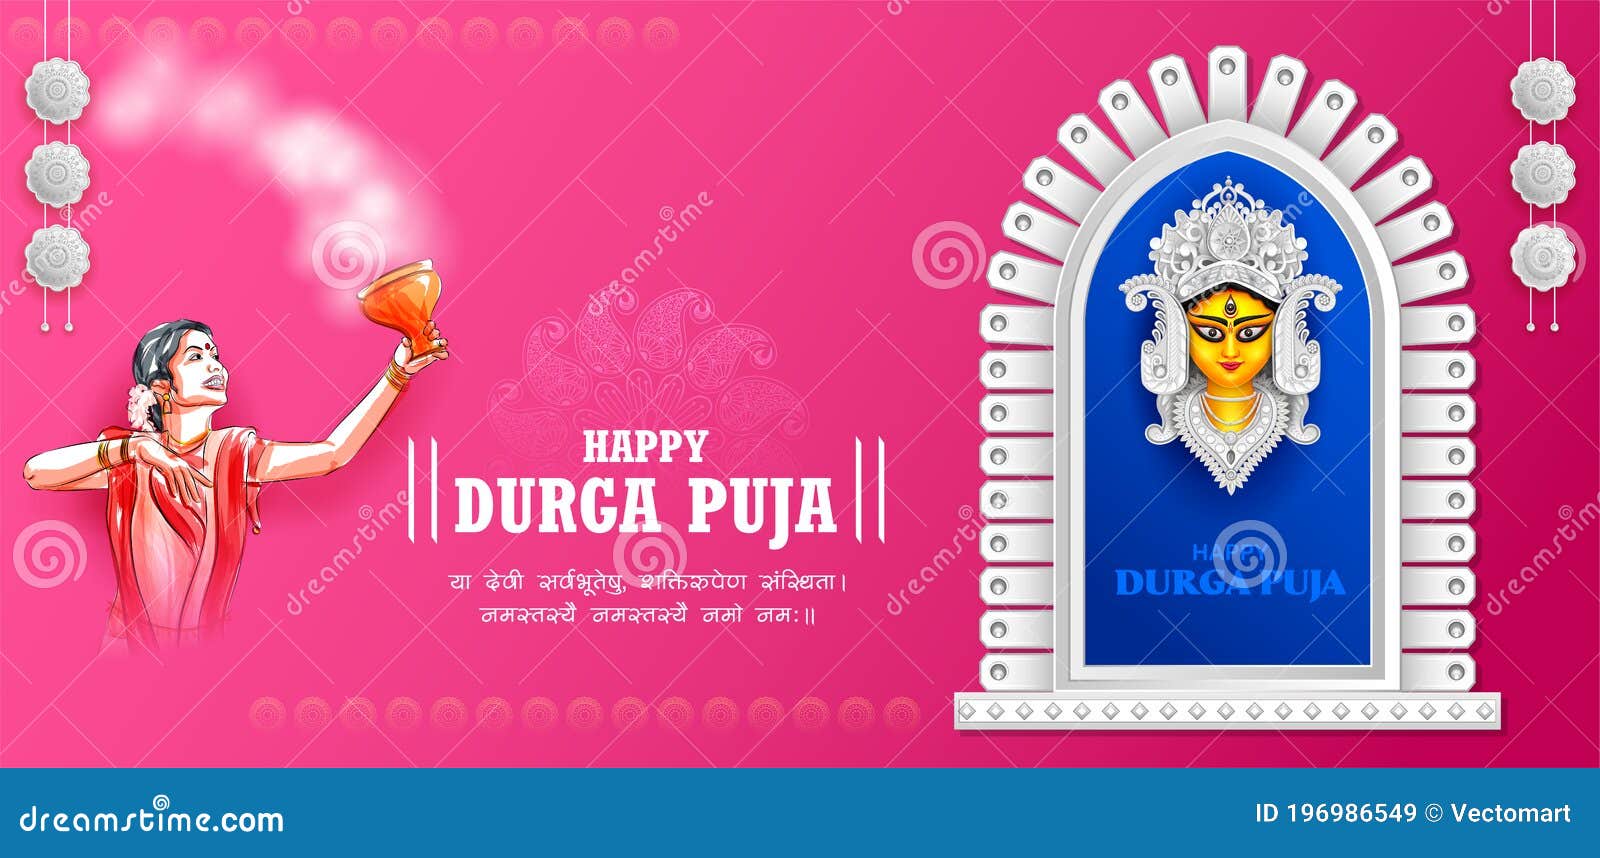 Goddess Durga Face in Happy Durga Puja Subh Navratri Indian Religious  Header Banner Background Stock Vector - Illustration of hindu, painting:  196986549